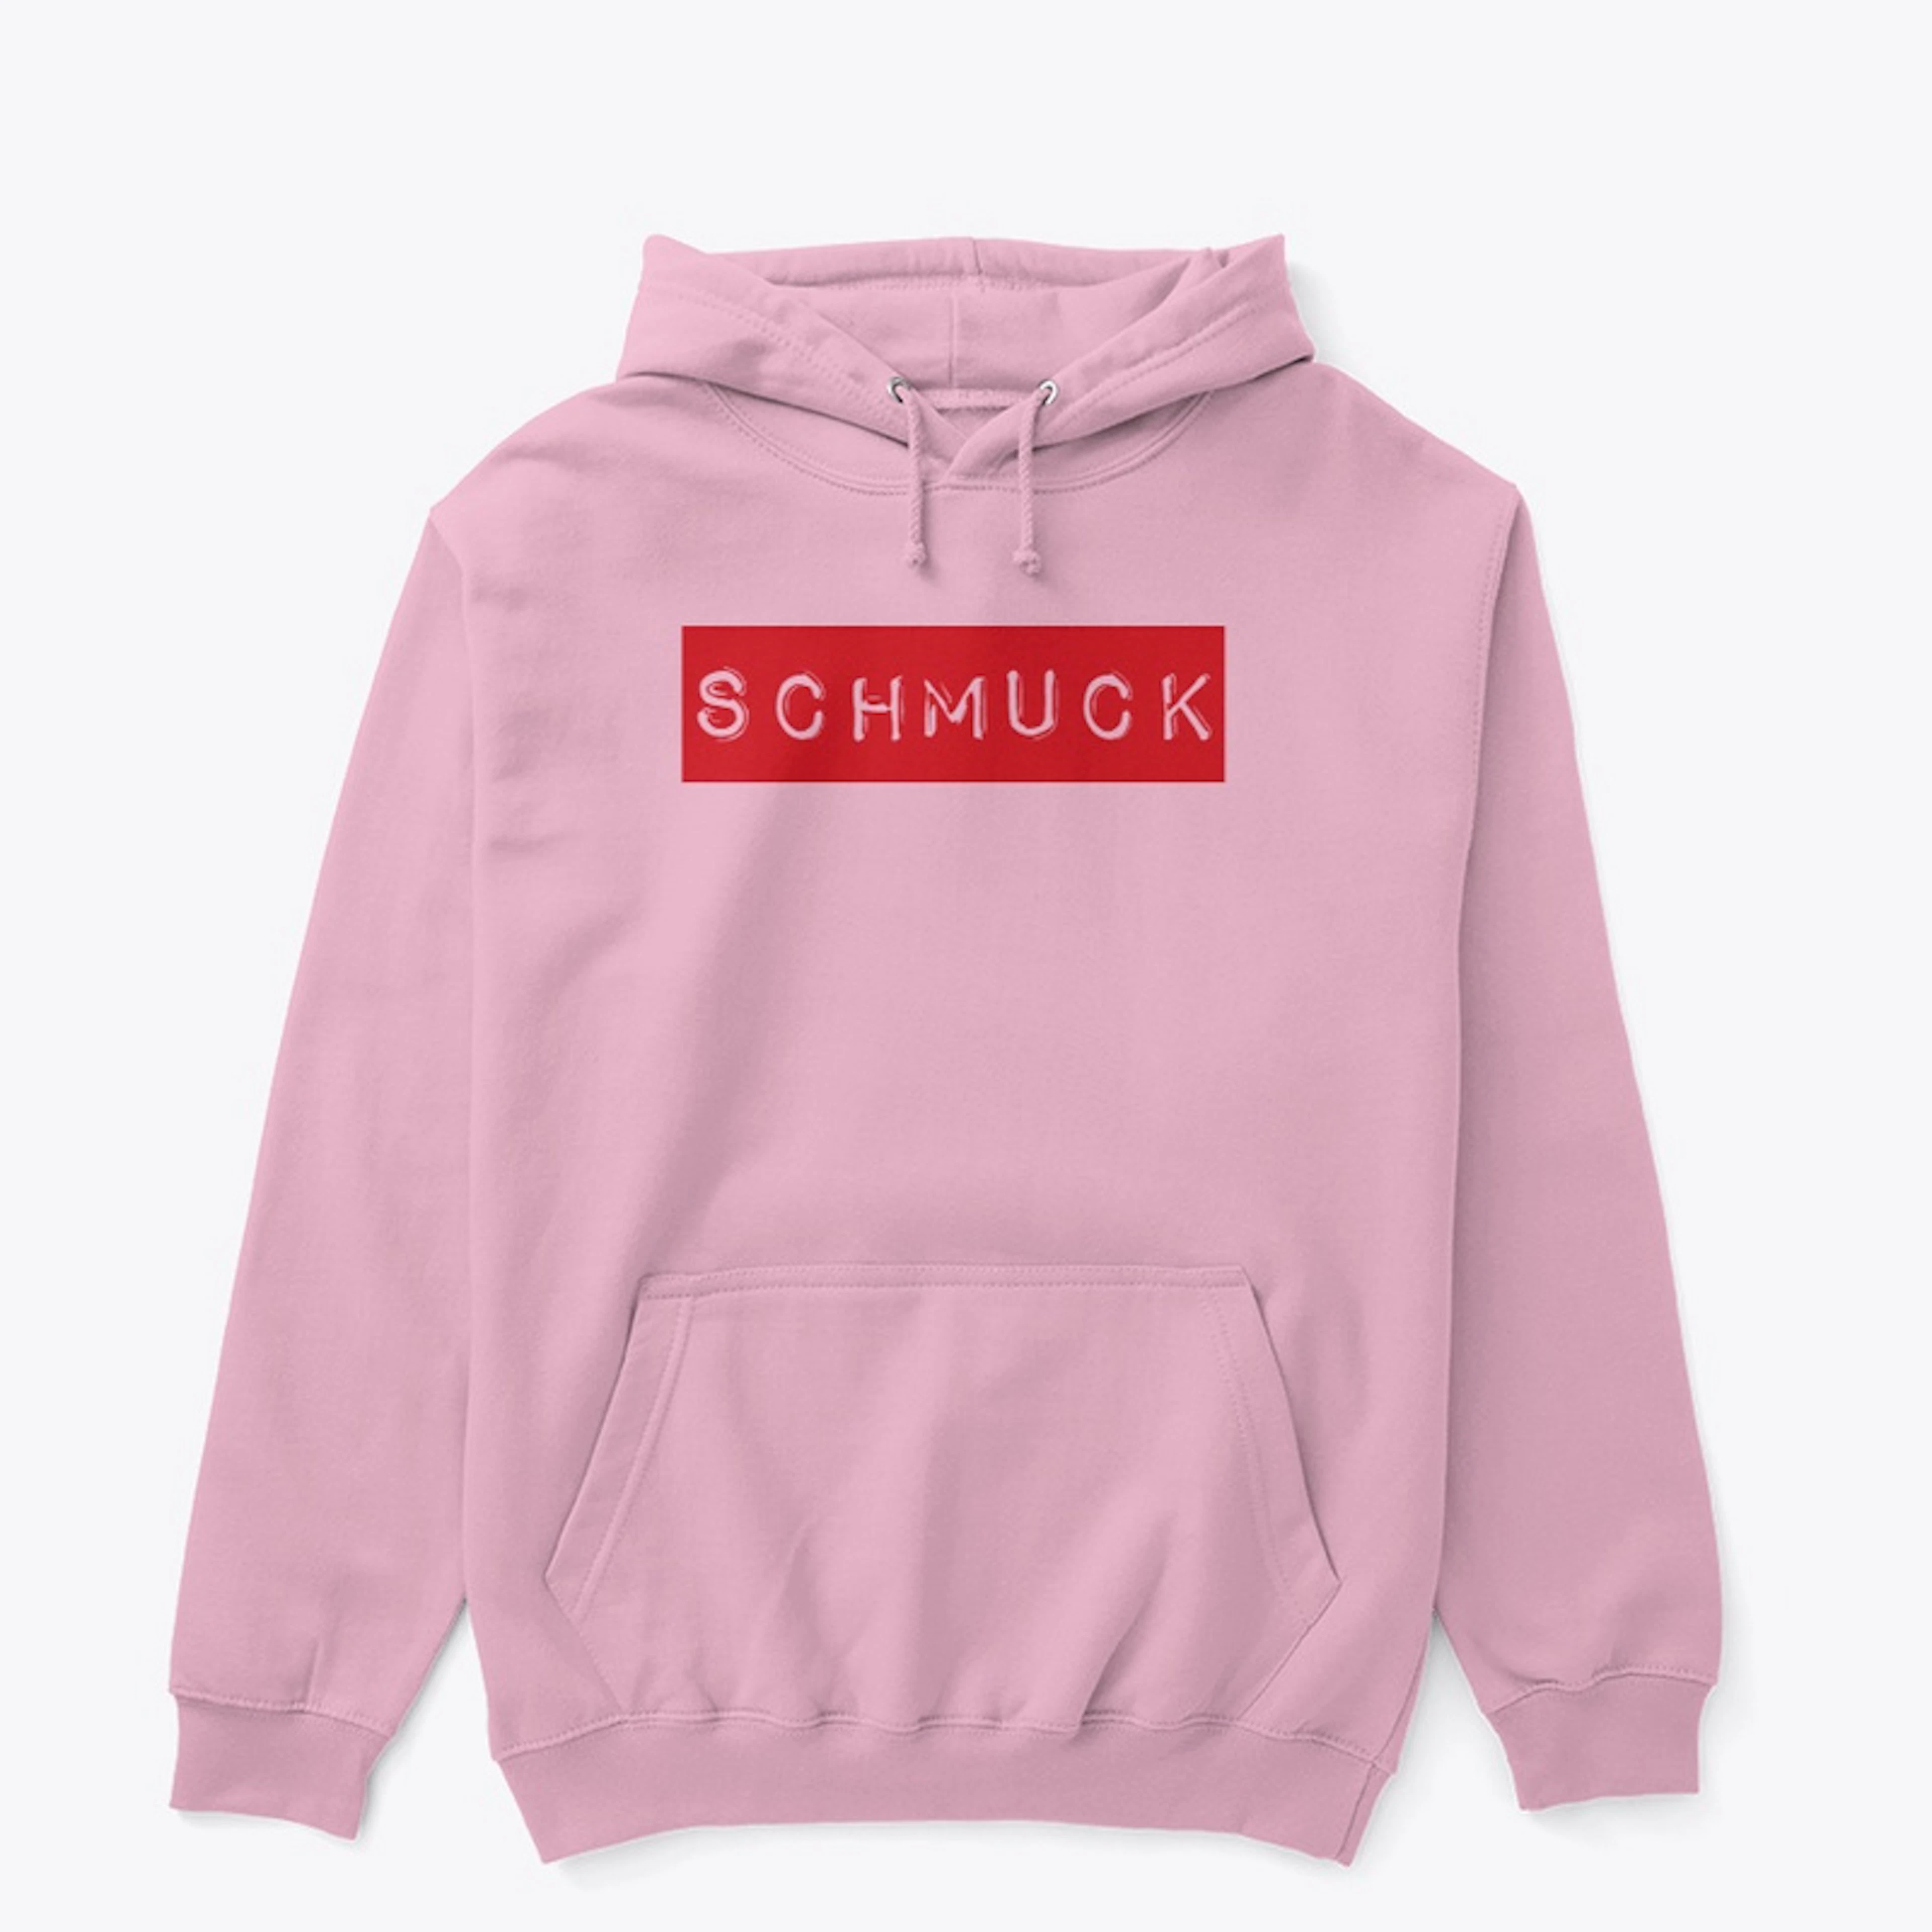 Schmuck   